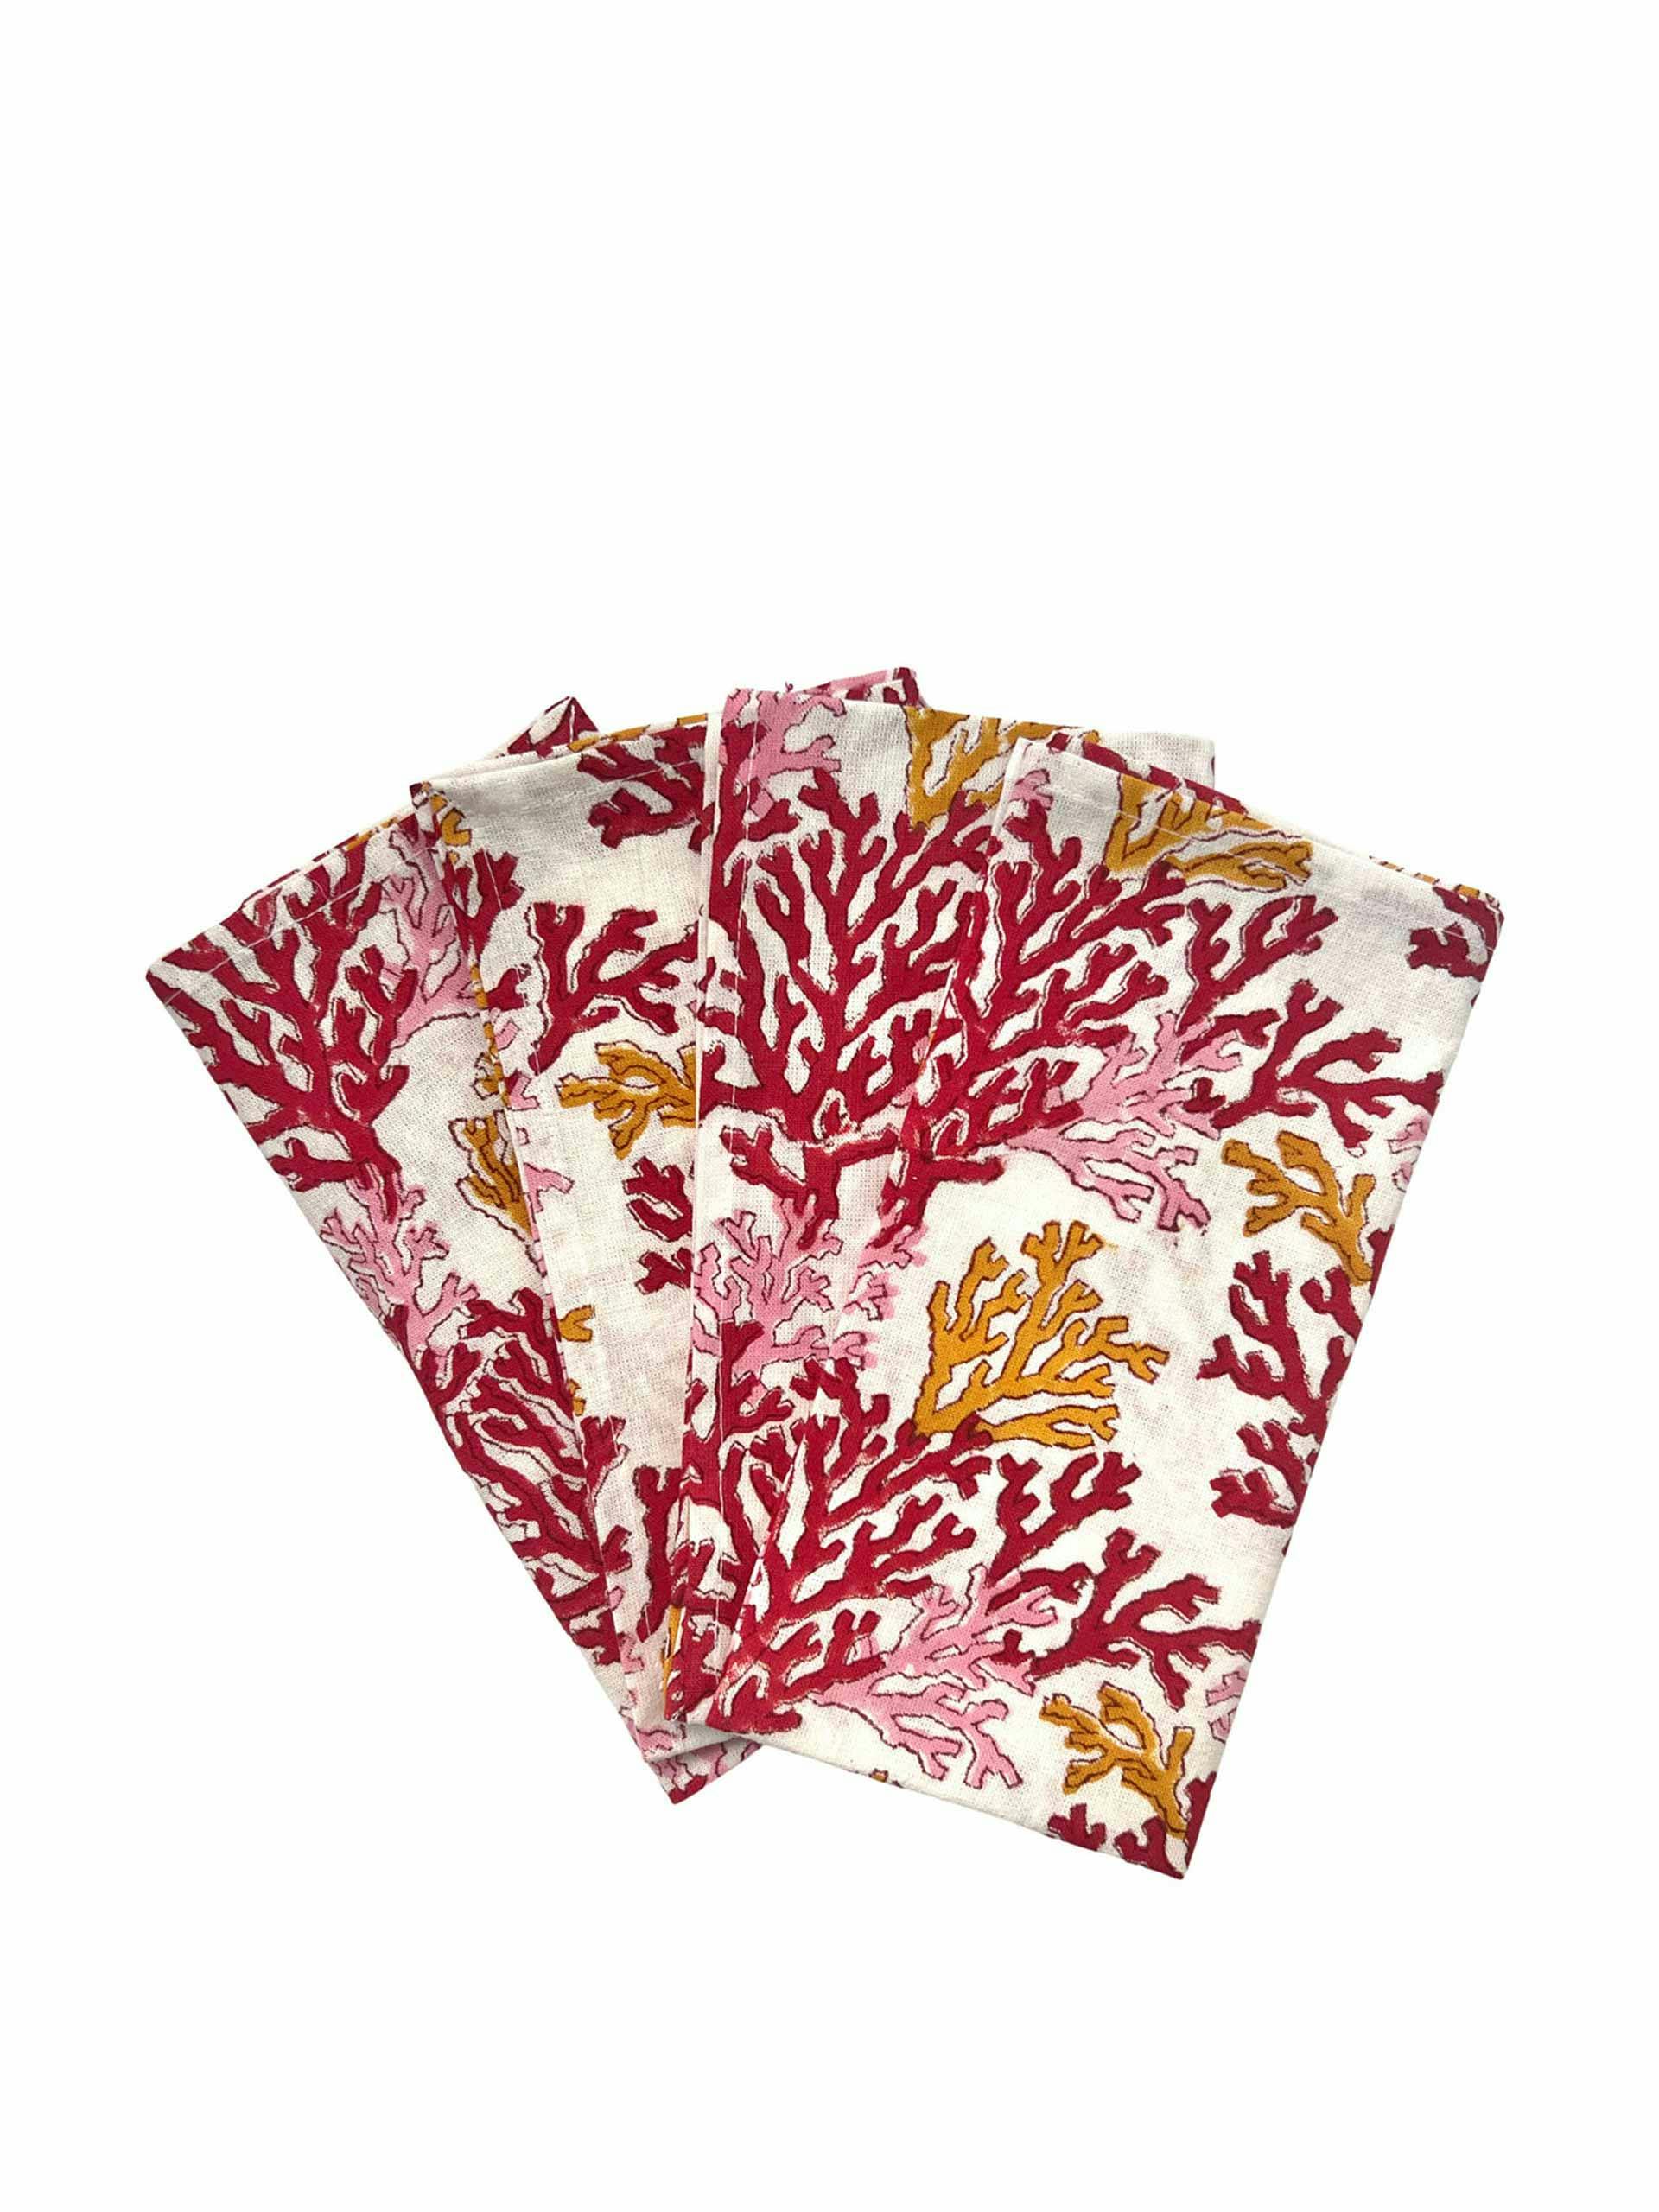 Multi coral block printed cotton napkins (set of 4)